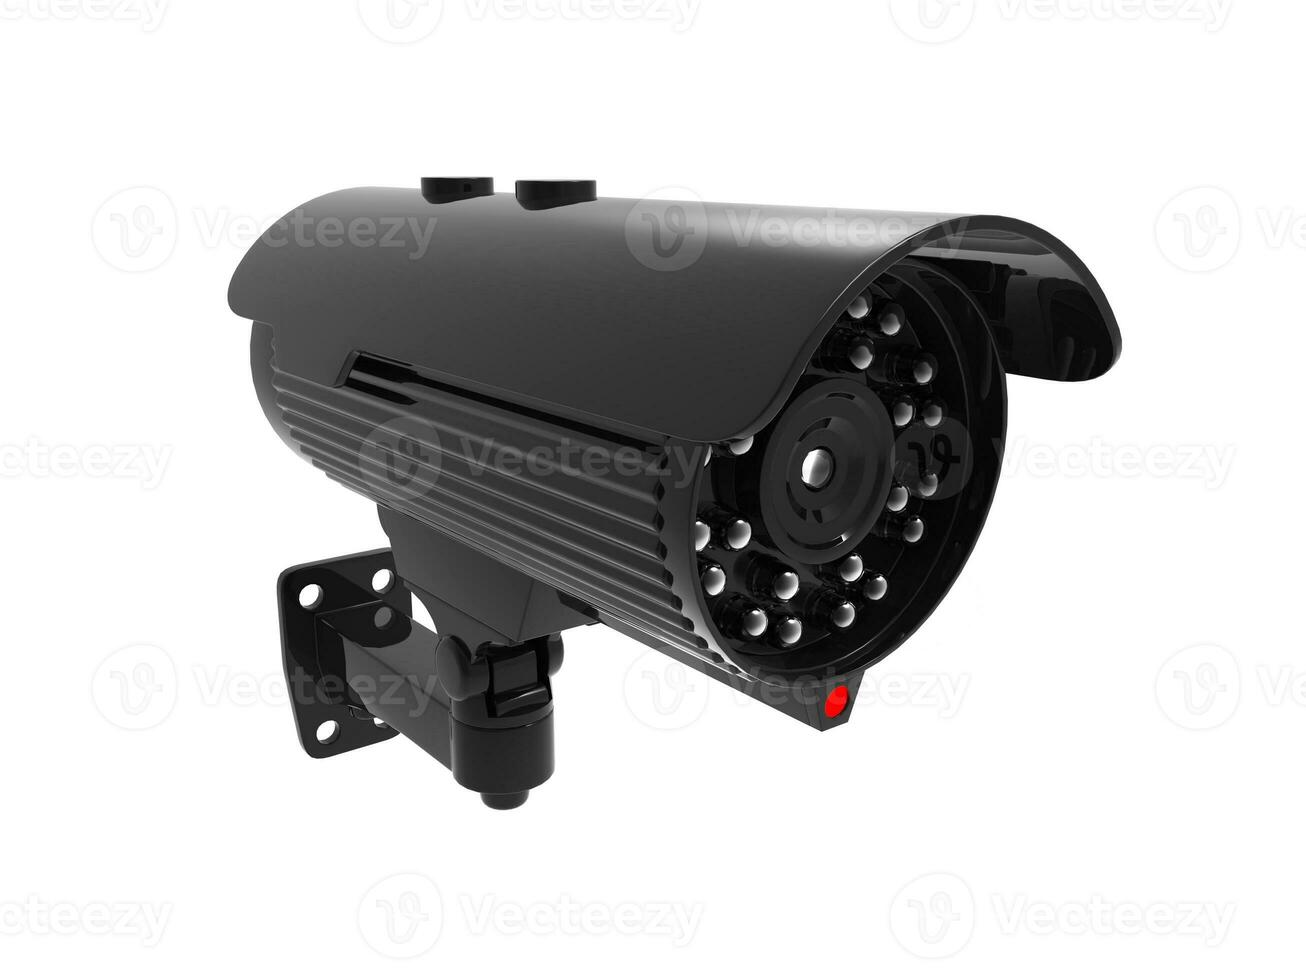 Security surveillance camera - top angle shot photo